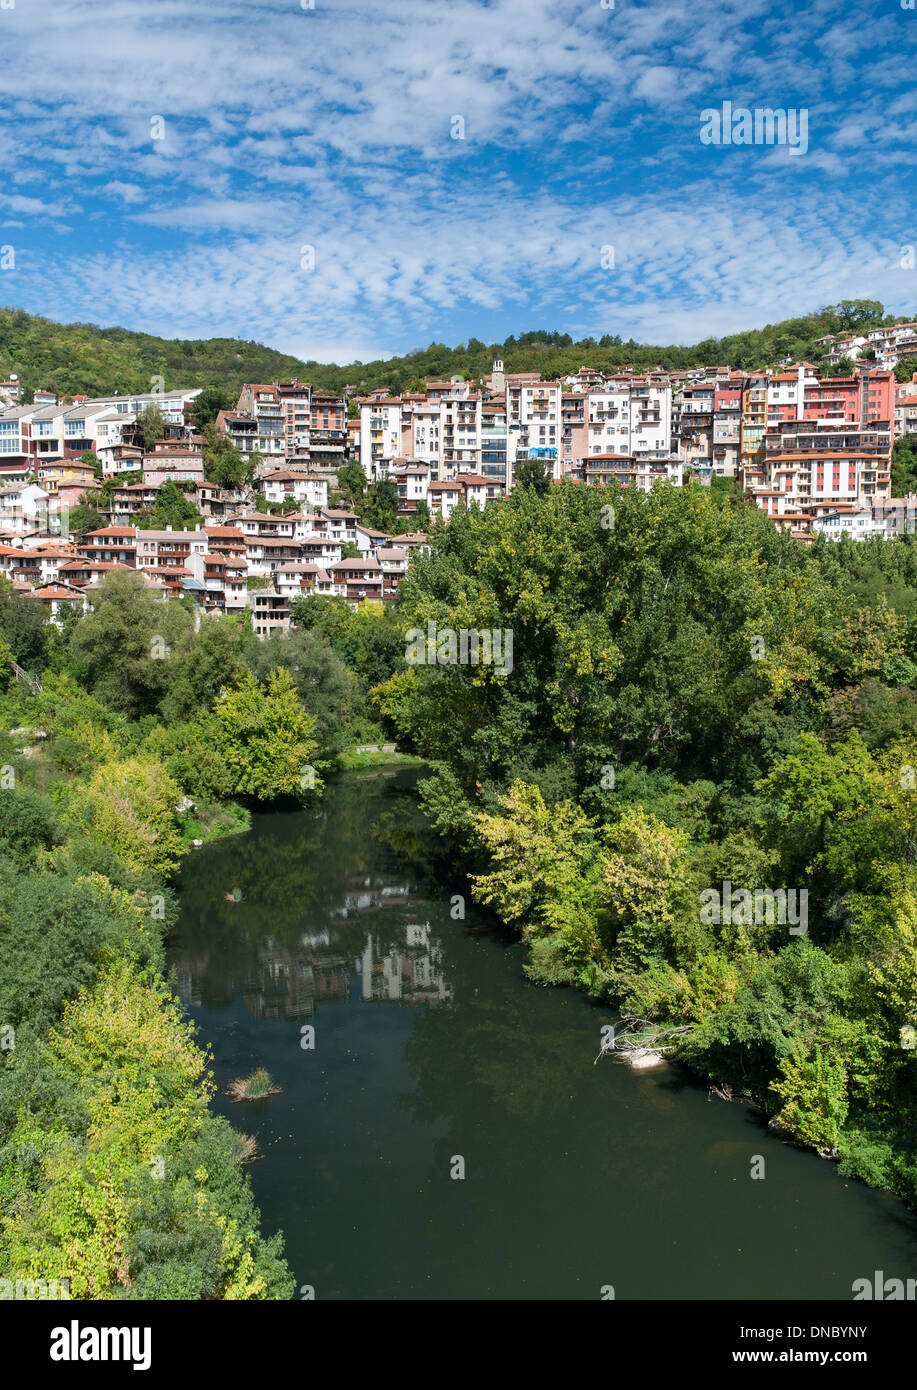 búlgaras fotografías e imágenes de alta resolución Alamy